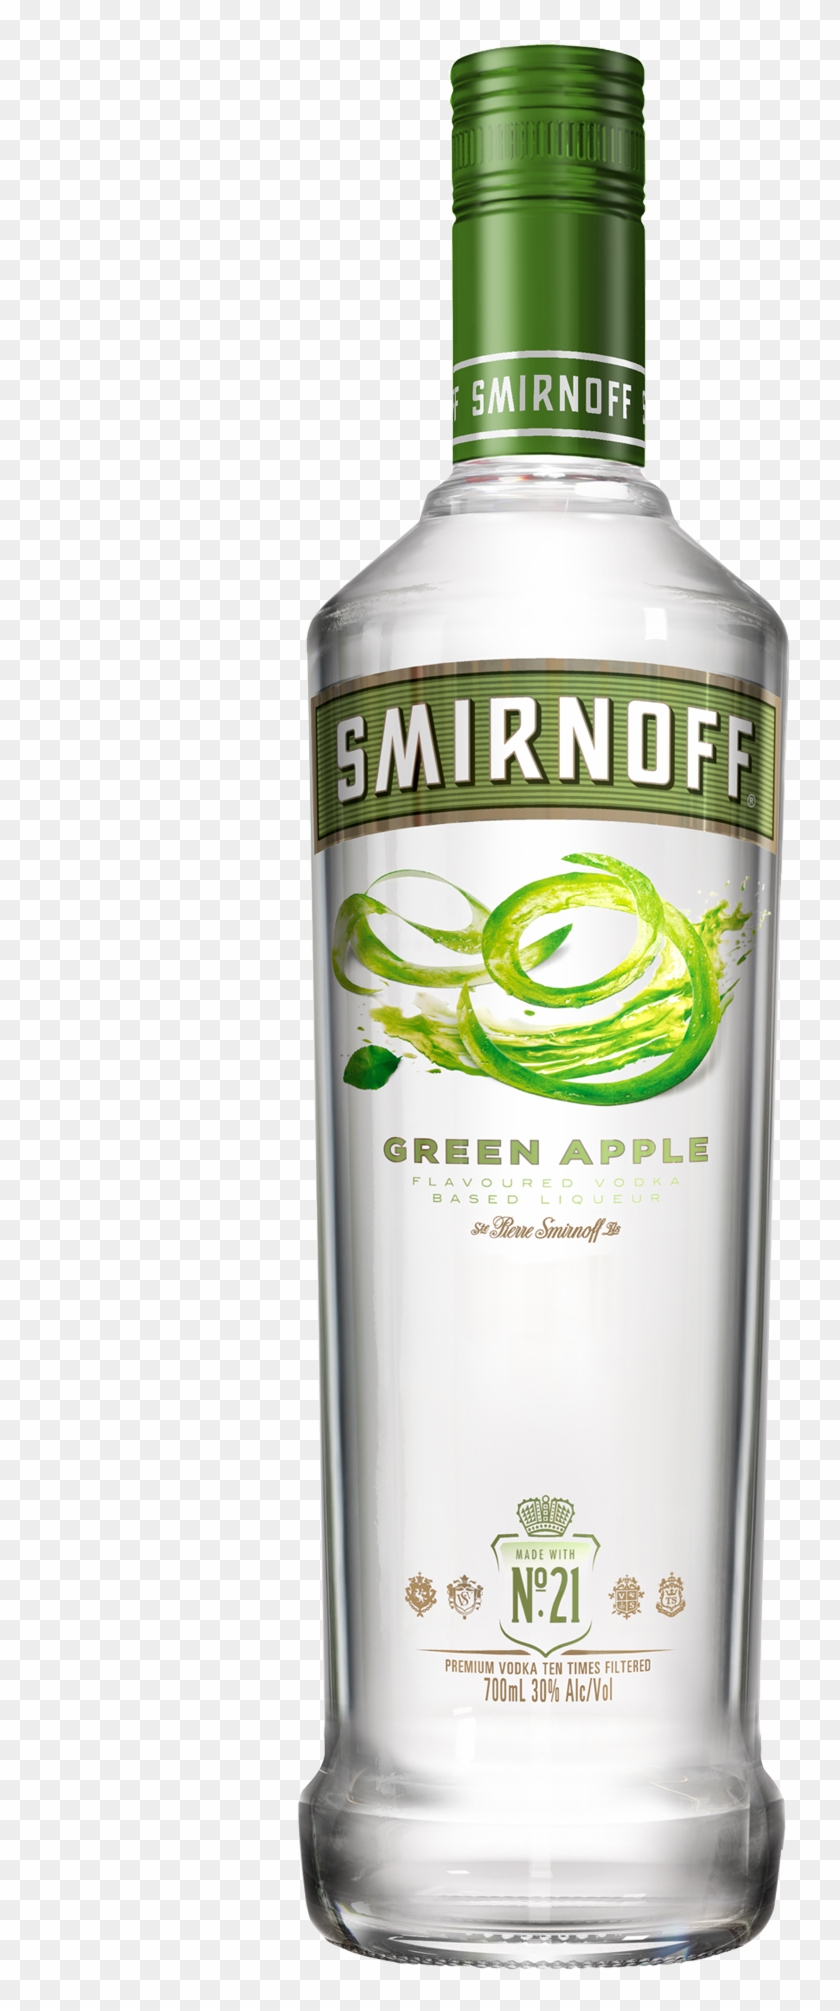 Smirnoff Green Apple Vodka 700ml - Smirnoff Green Apple 0 70 Clipart